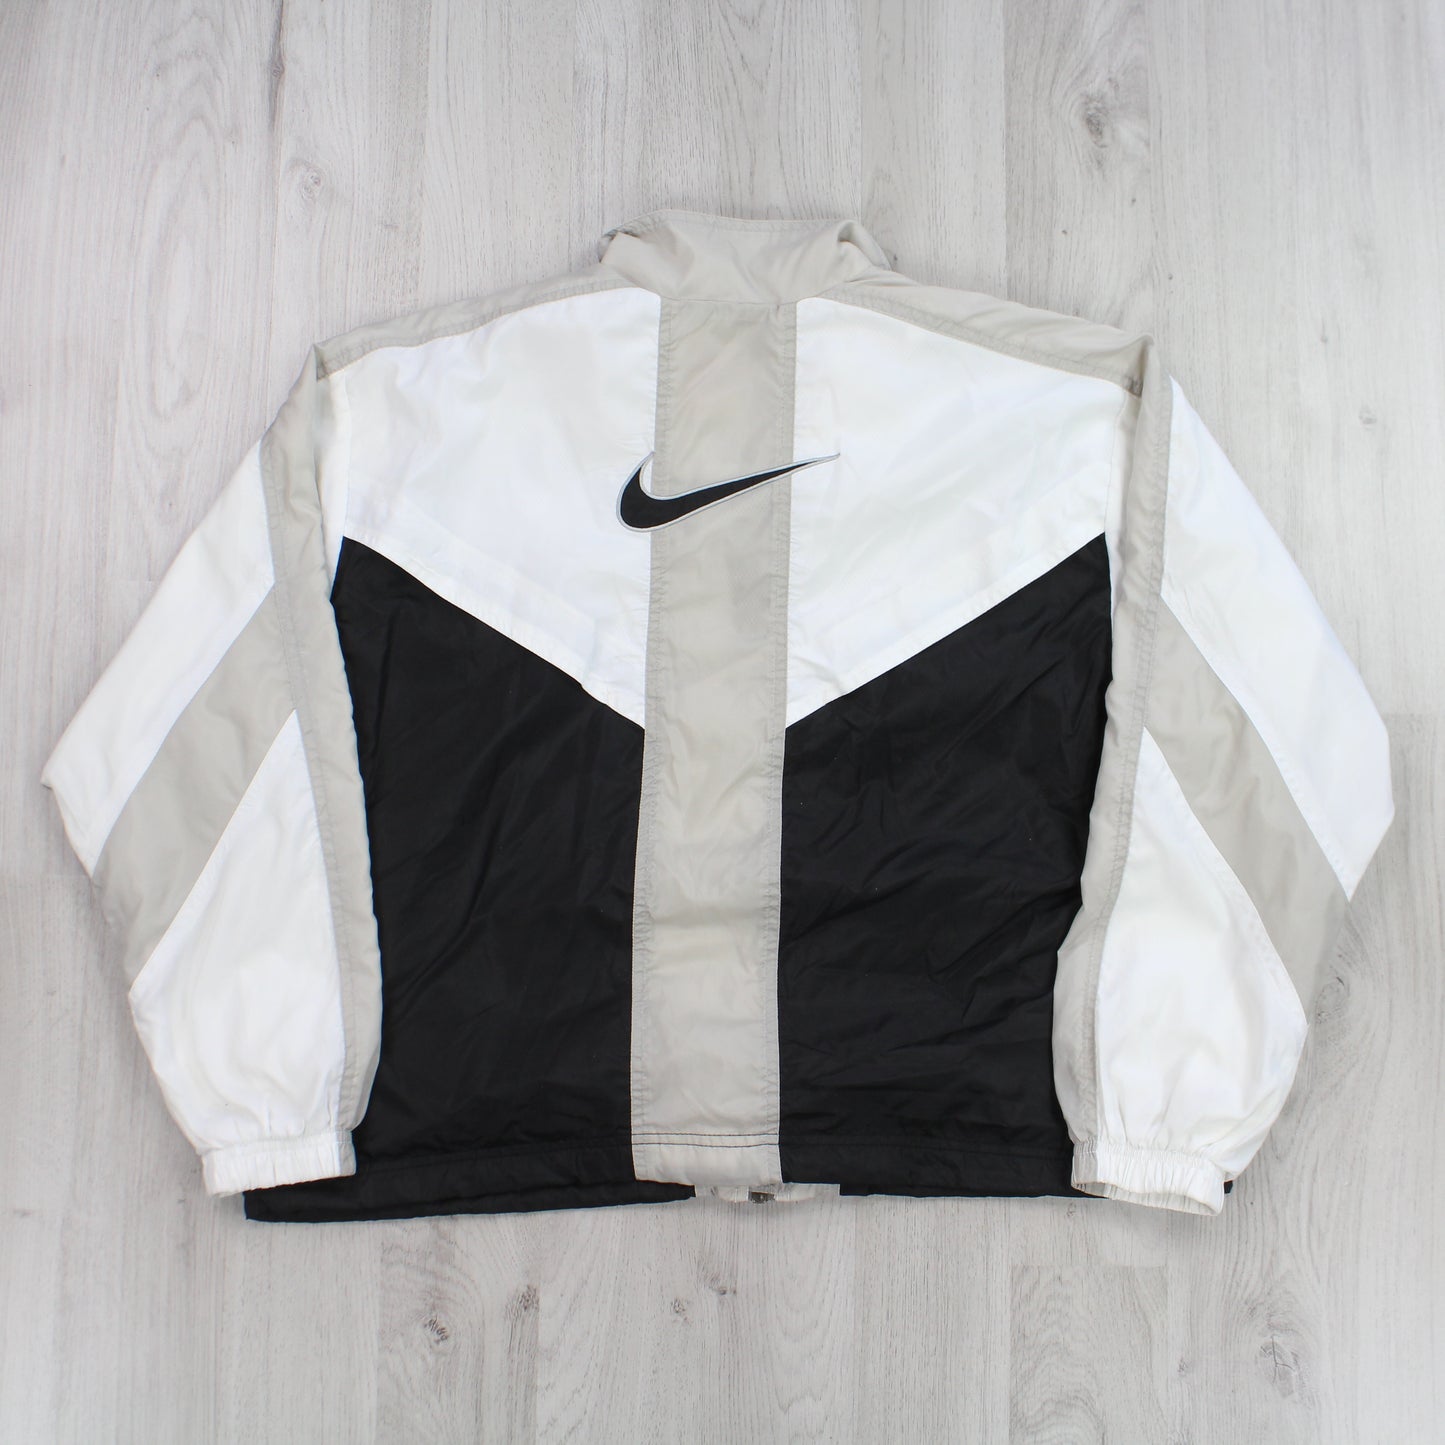 RARE Vintage 1990s Nike Track Jacket Black/White - (S)